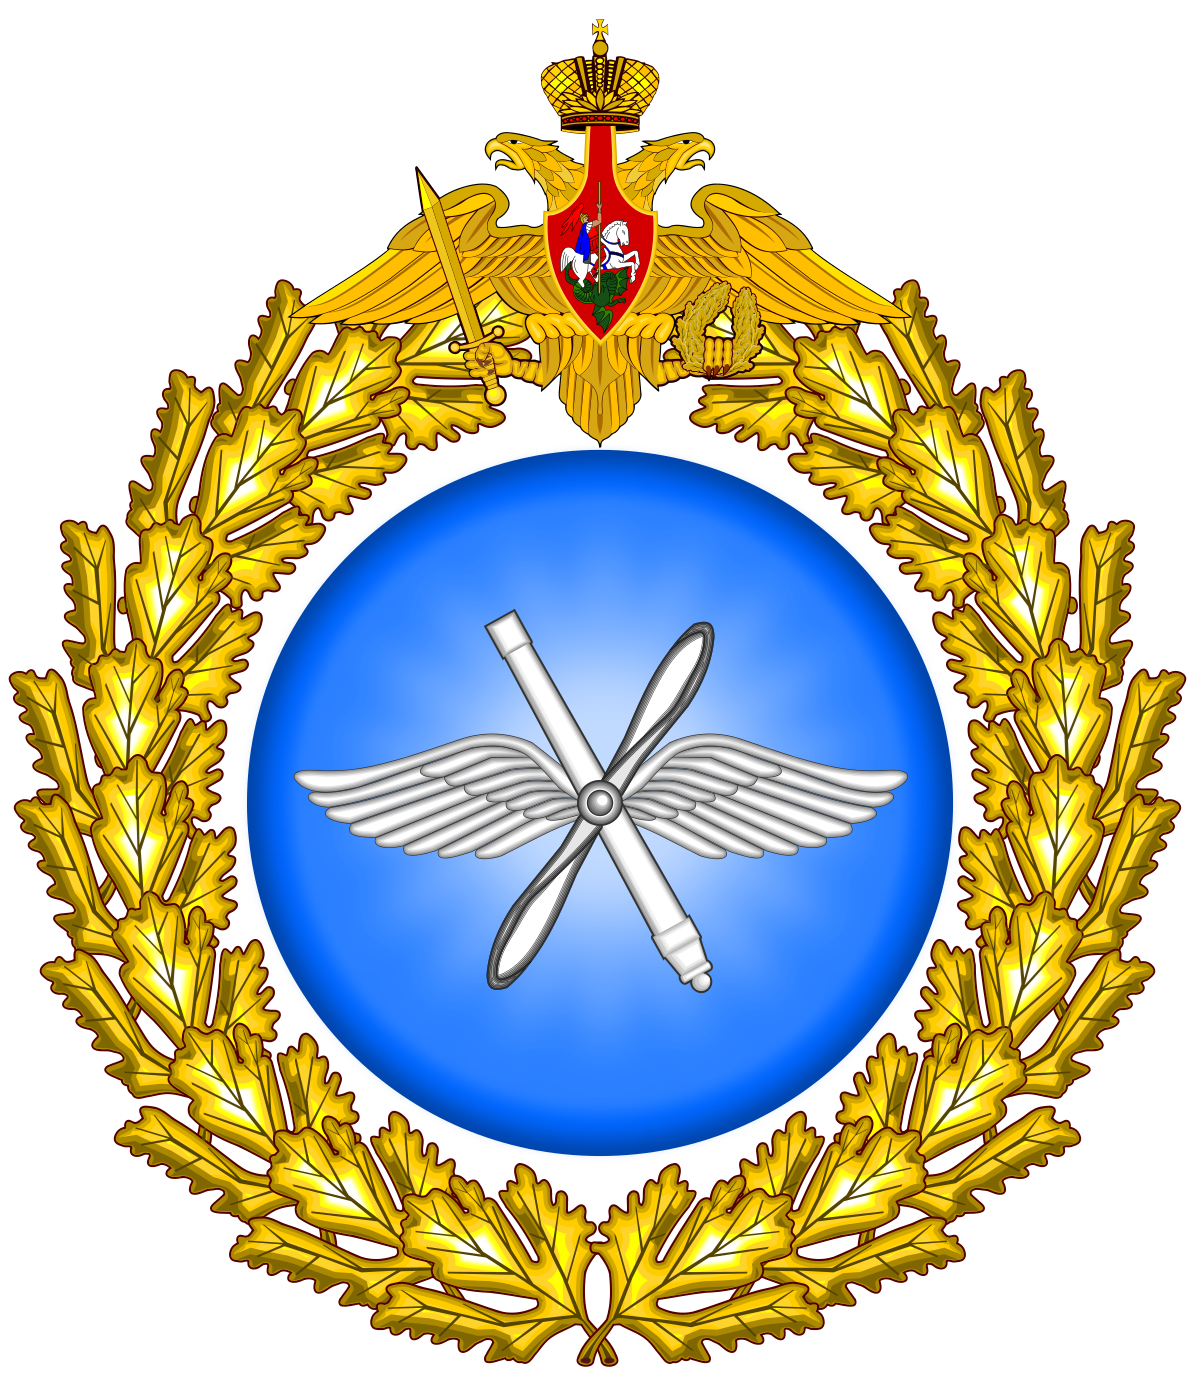 Russian Air Force - Wikipedia